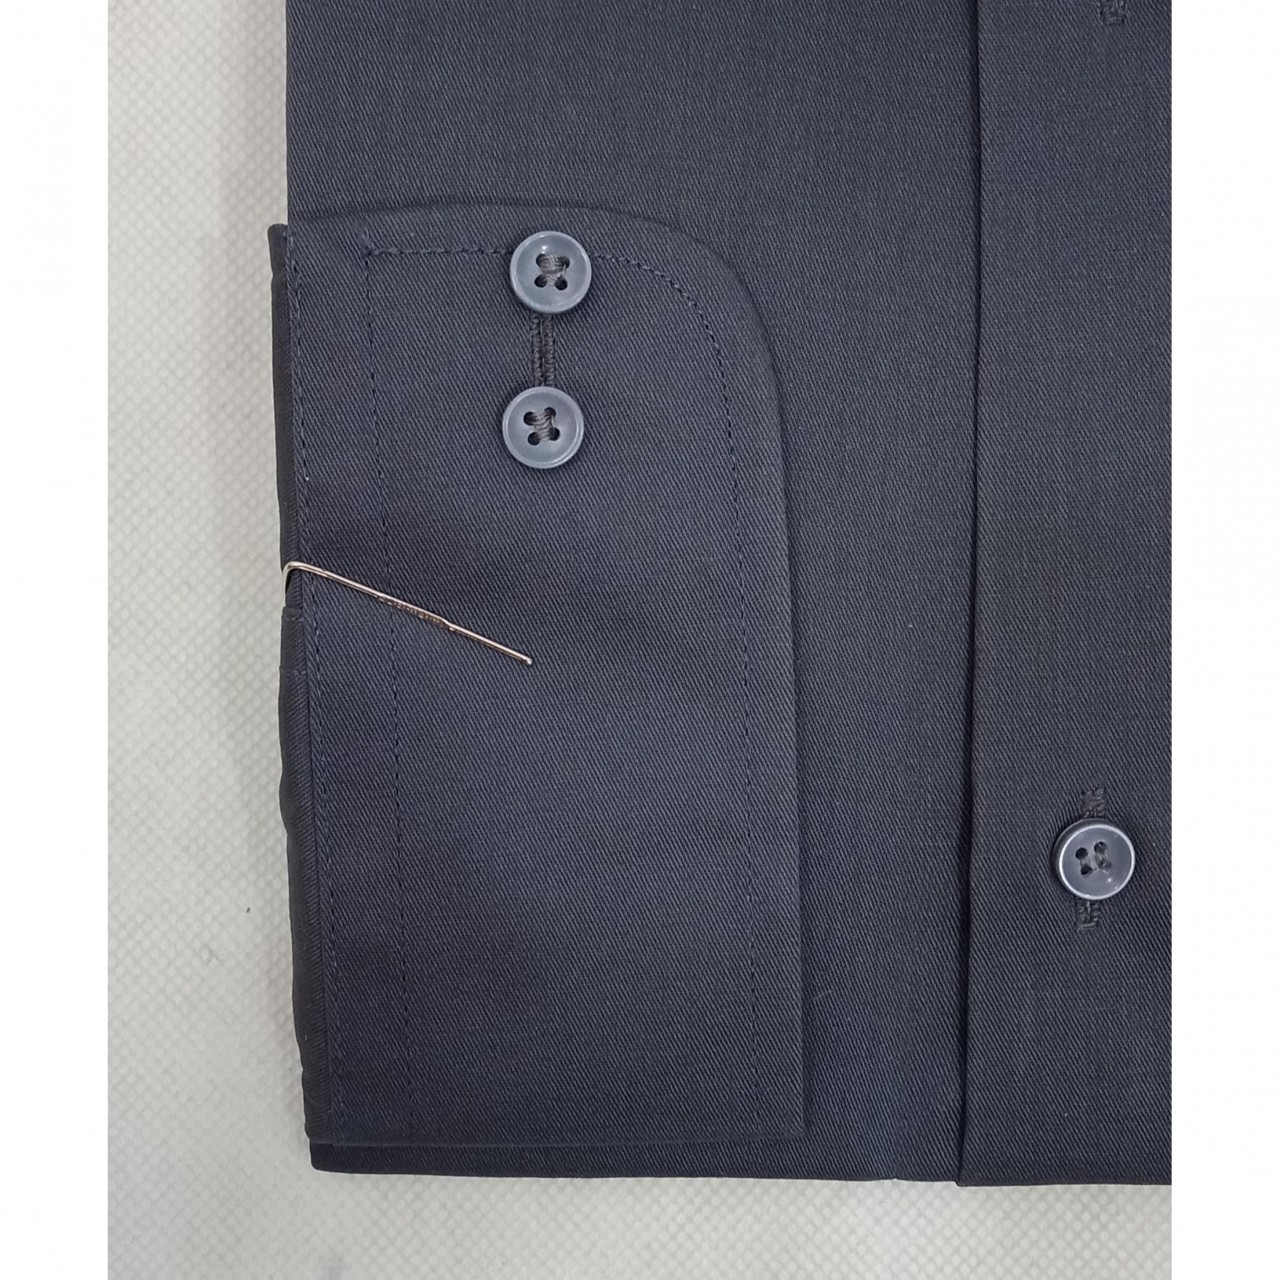 Plain Self Design Formal Shirt For Men - Double Needle Stitching - Grey